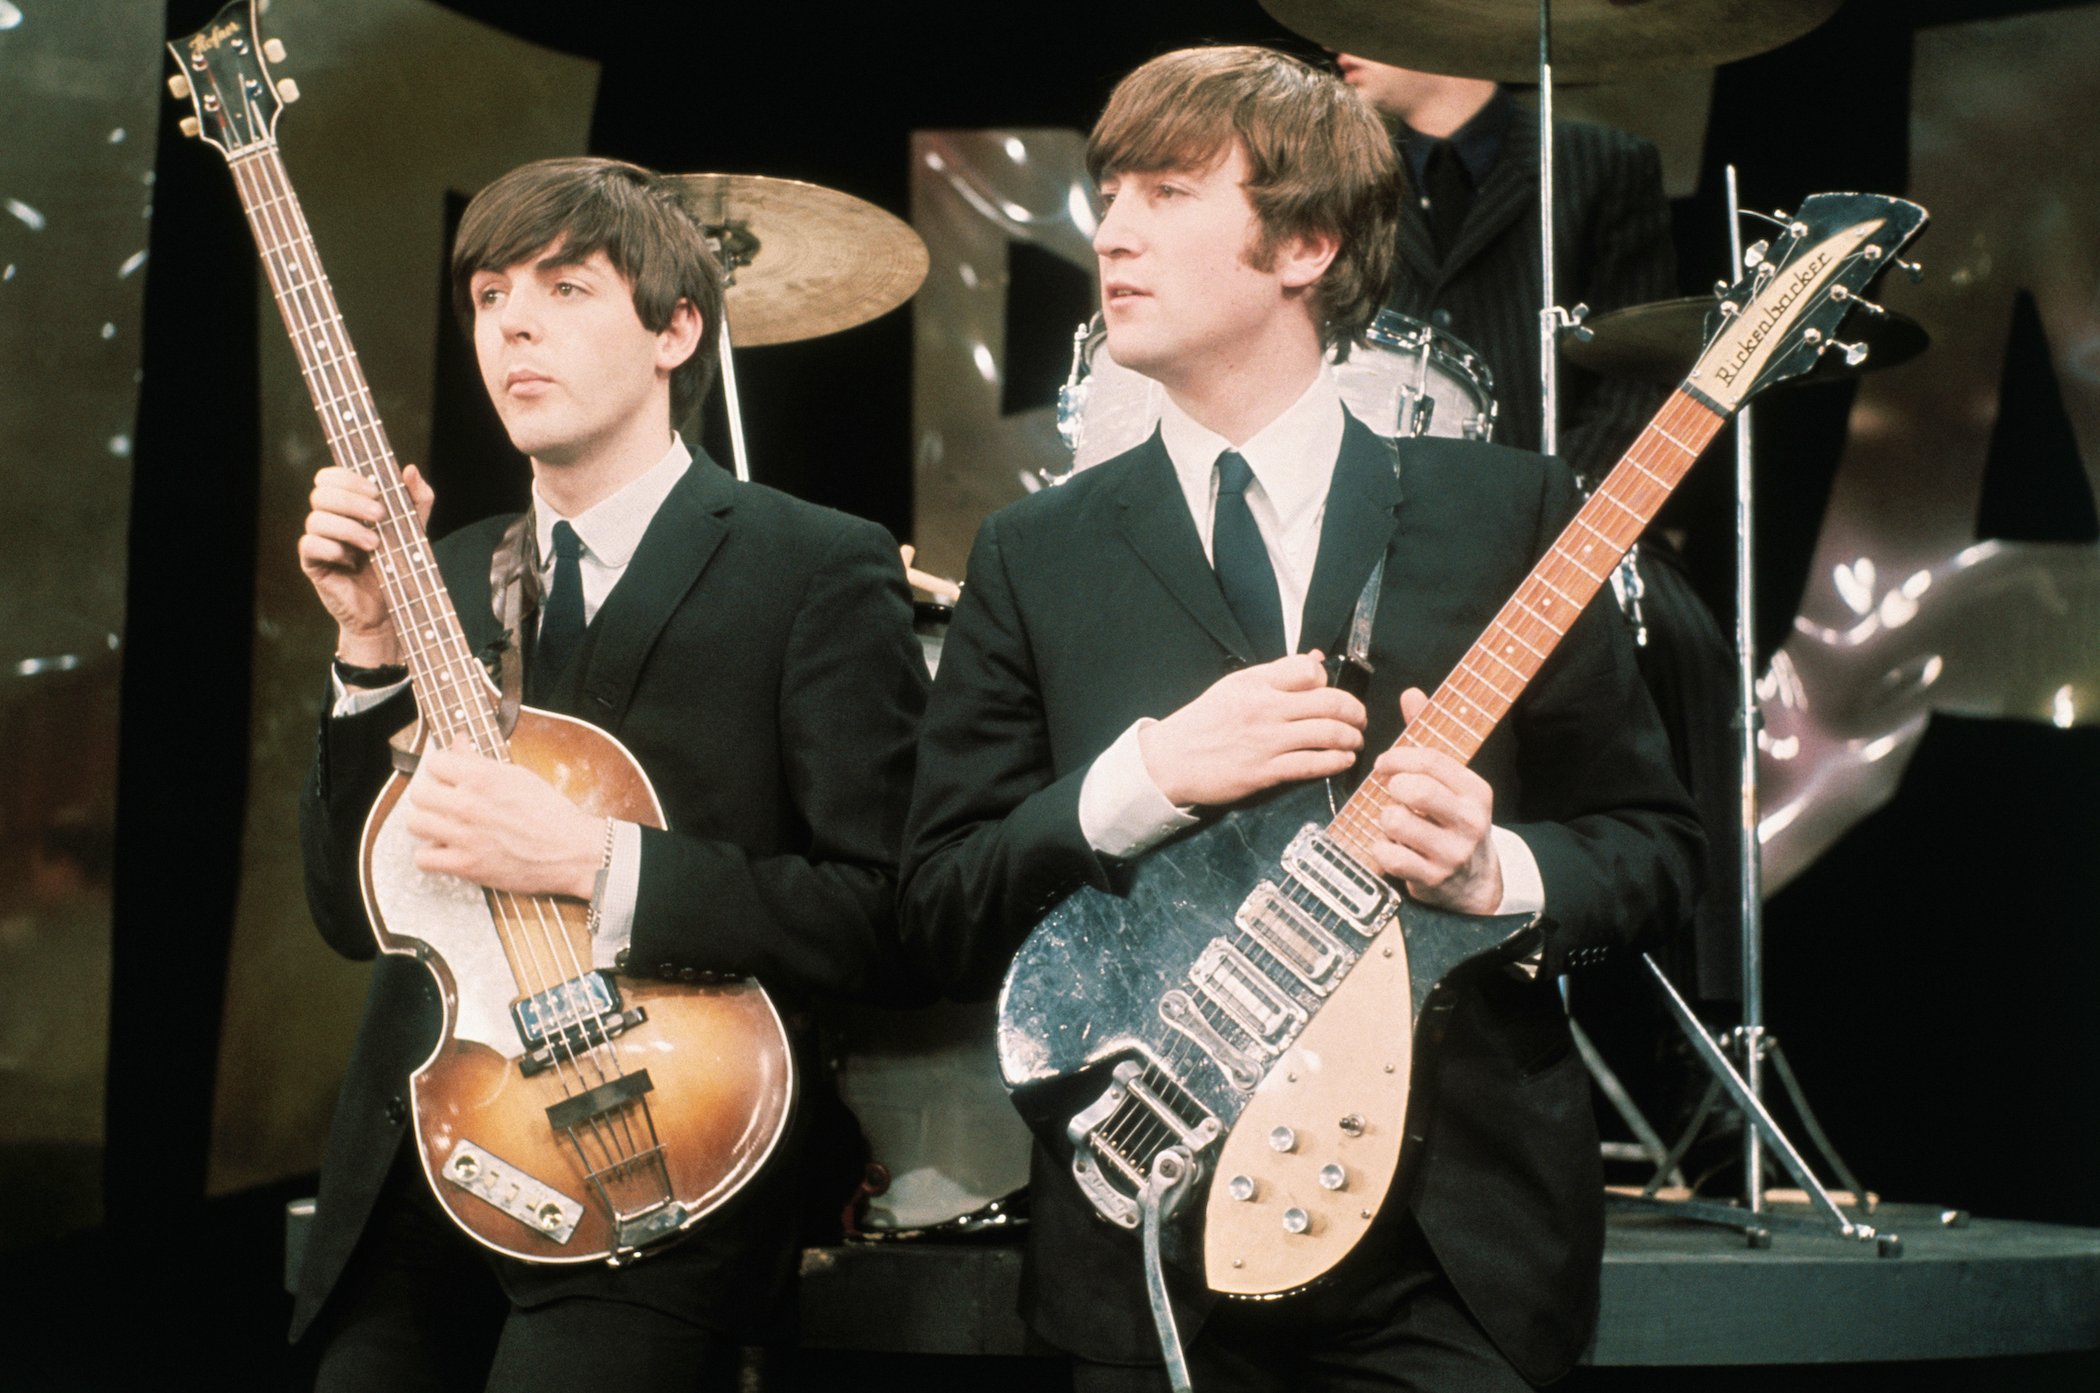 Paul McCartney and John Lennon hold their guitars on the set of The Ed Sullivan Show